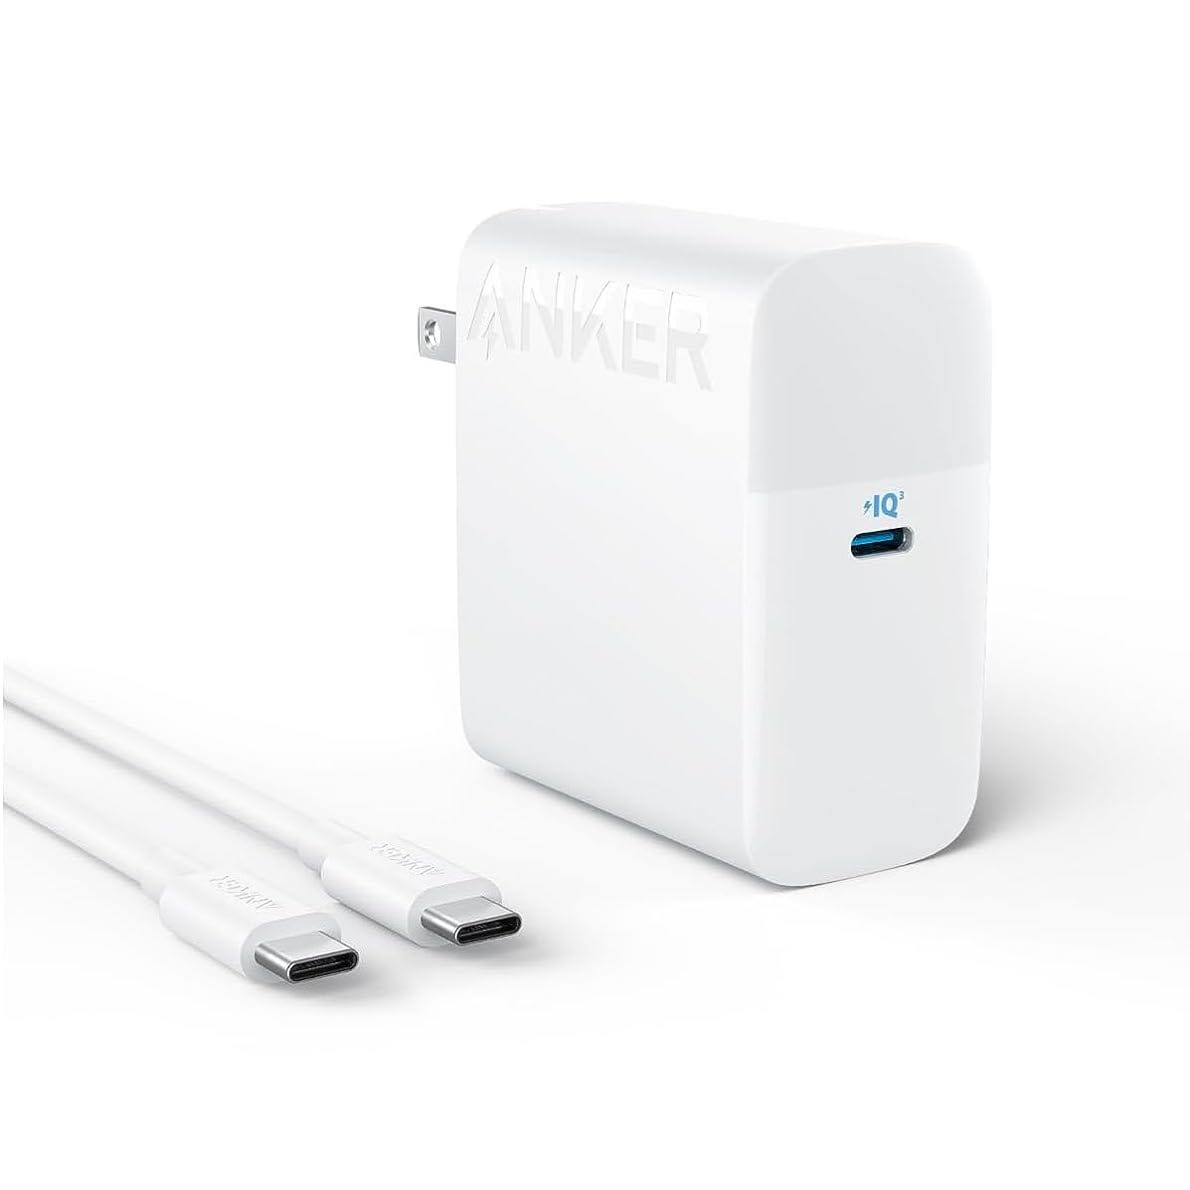 Anker、ケーブル付属の100W USB-C充電器に新色ホワイト追加